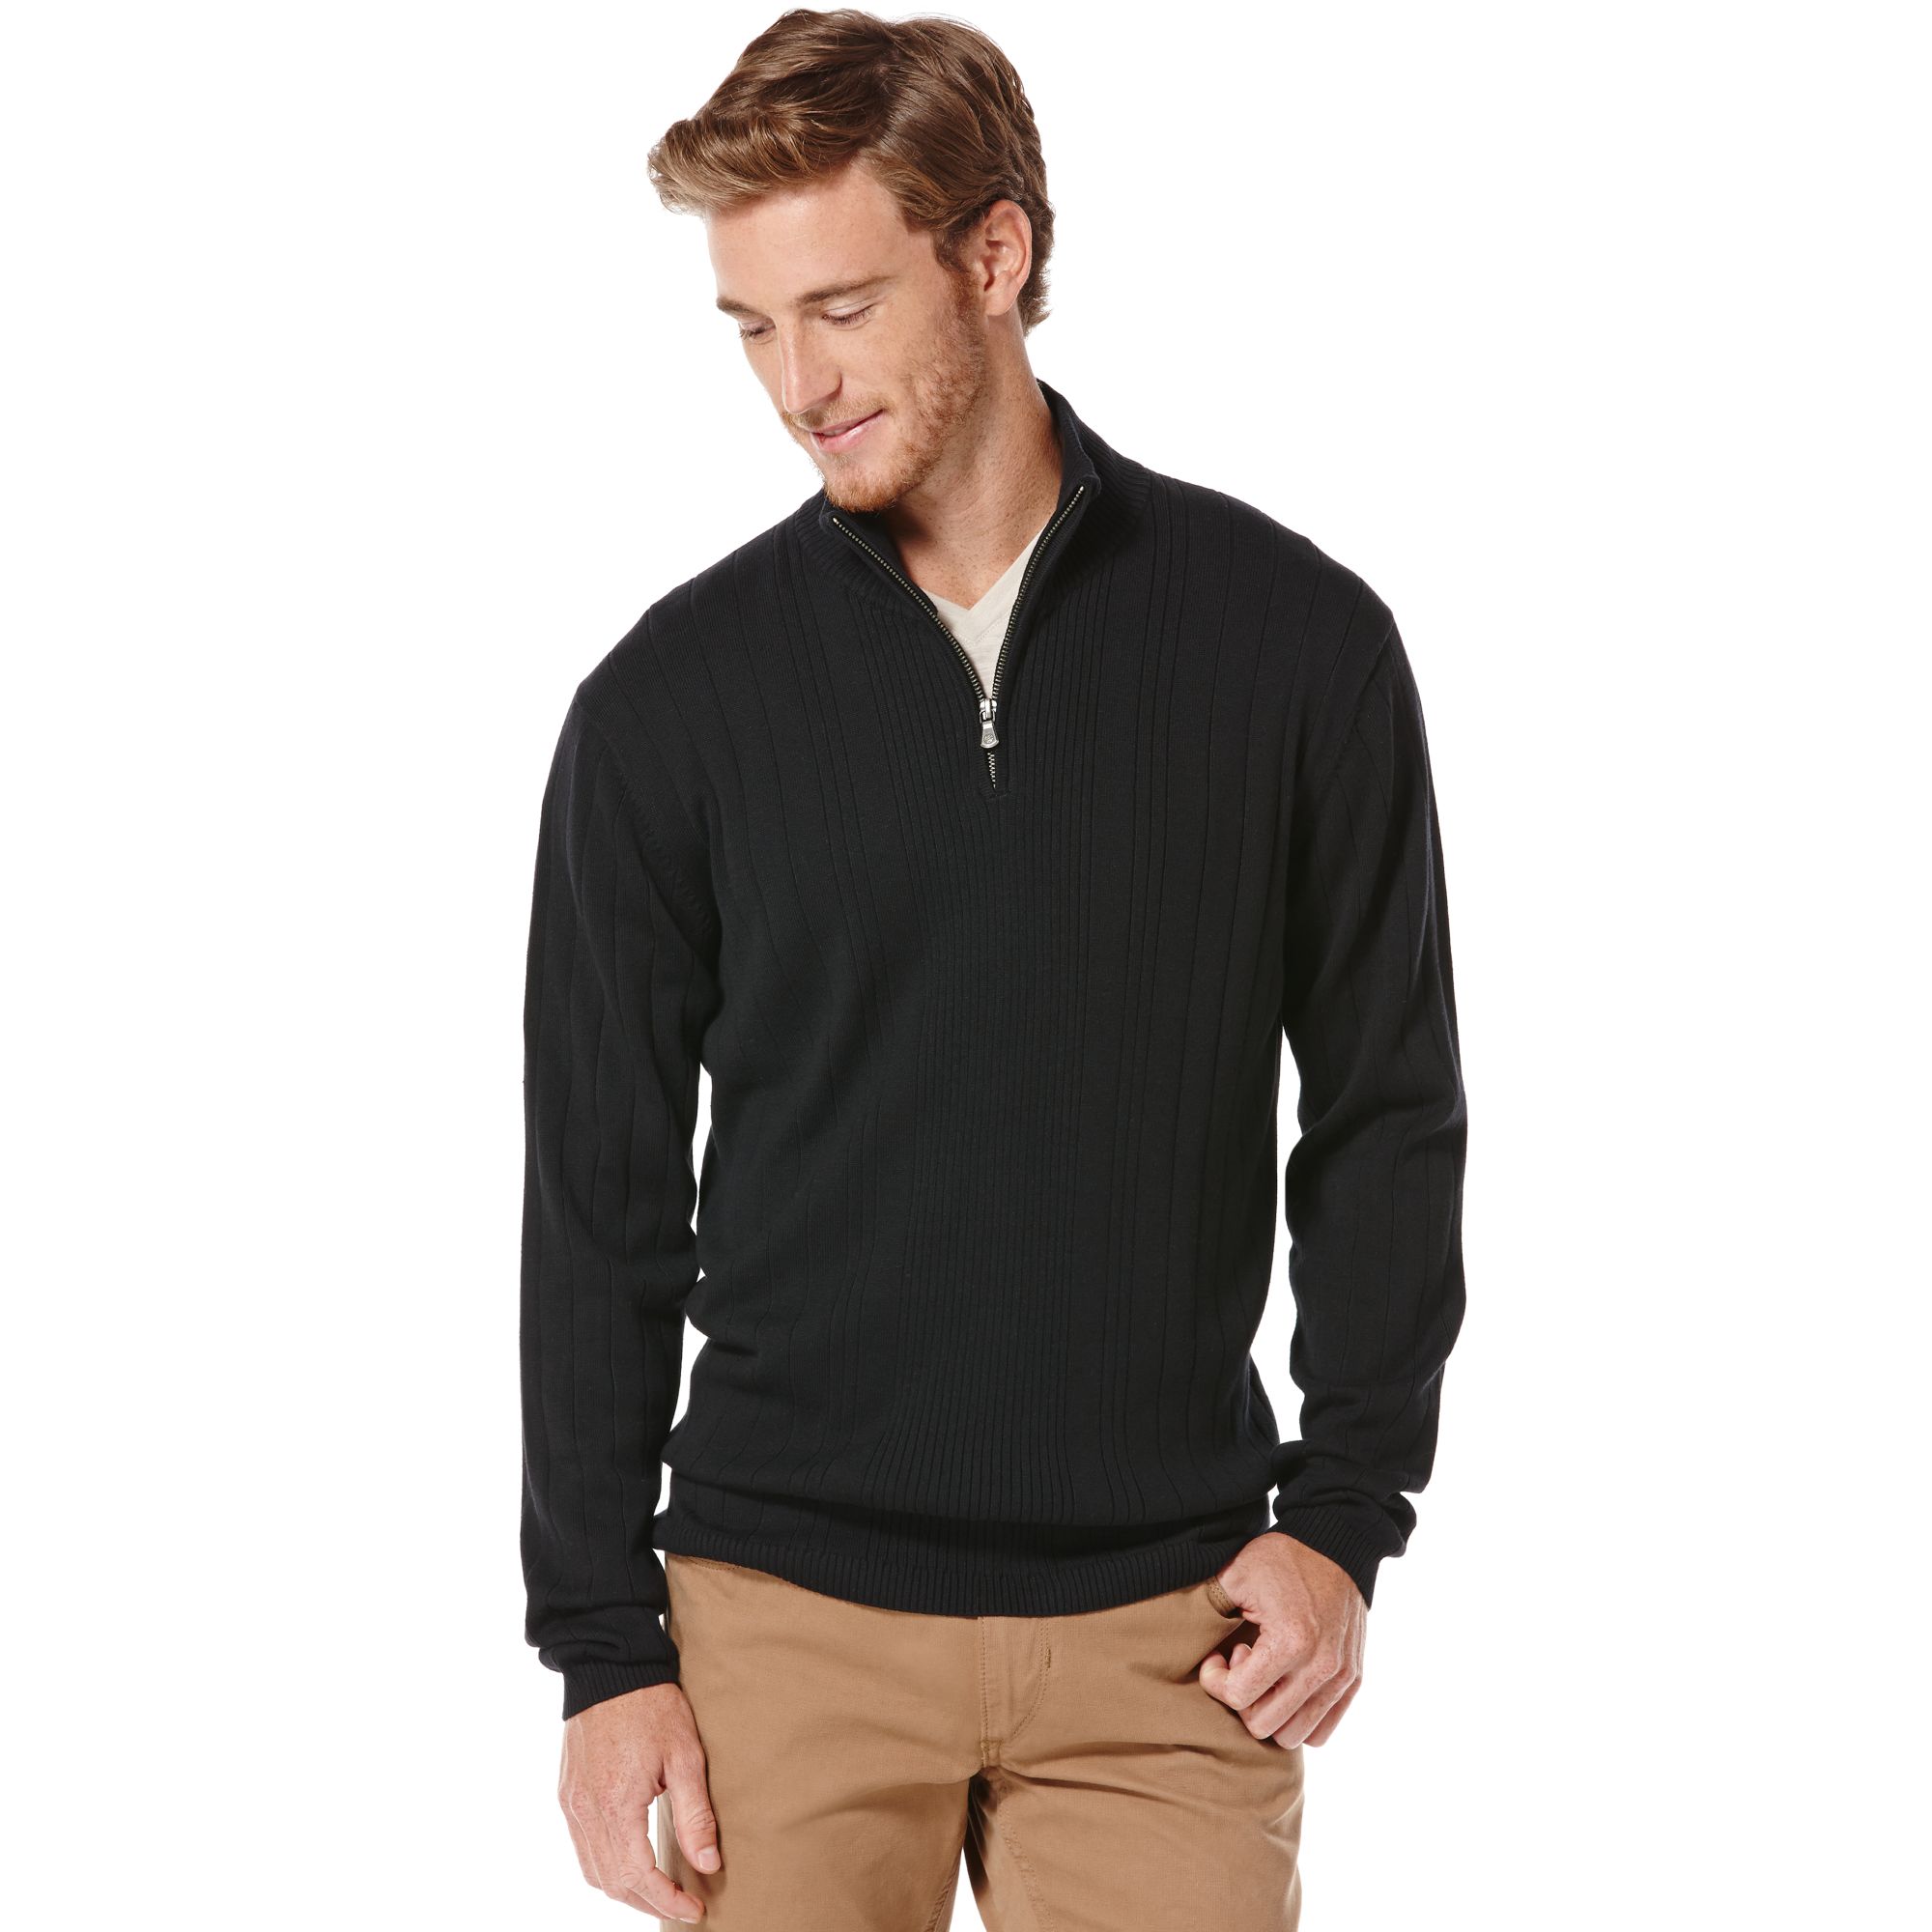 Lyst - Perry Ellis Quarter Zip Sweater in Black for Men